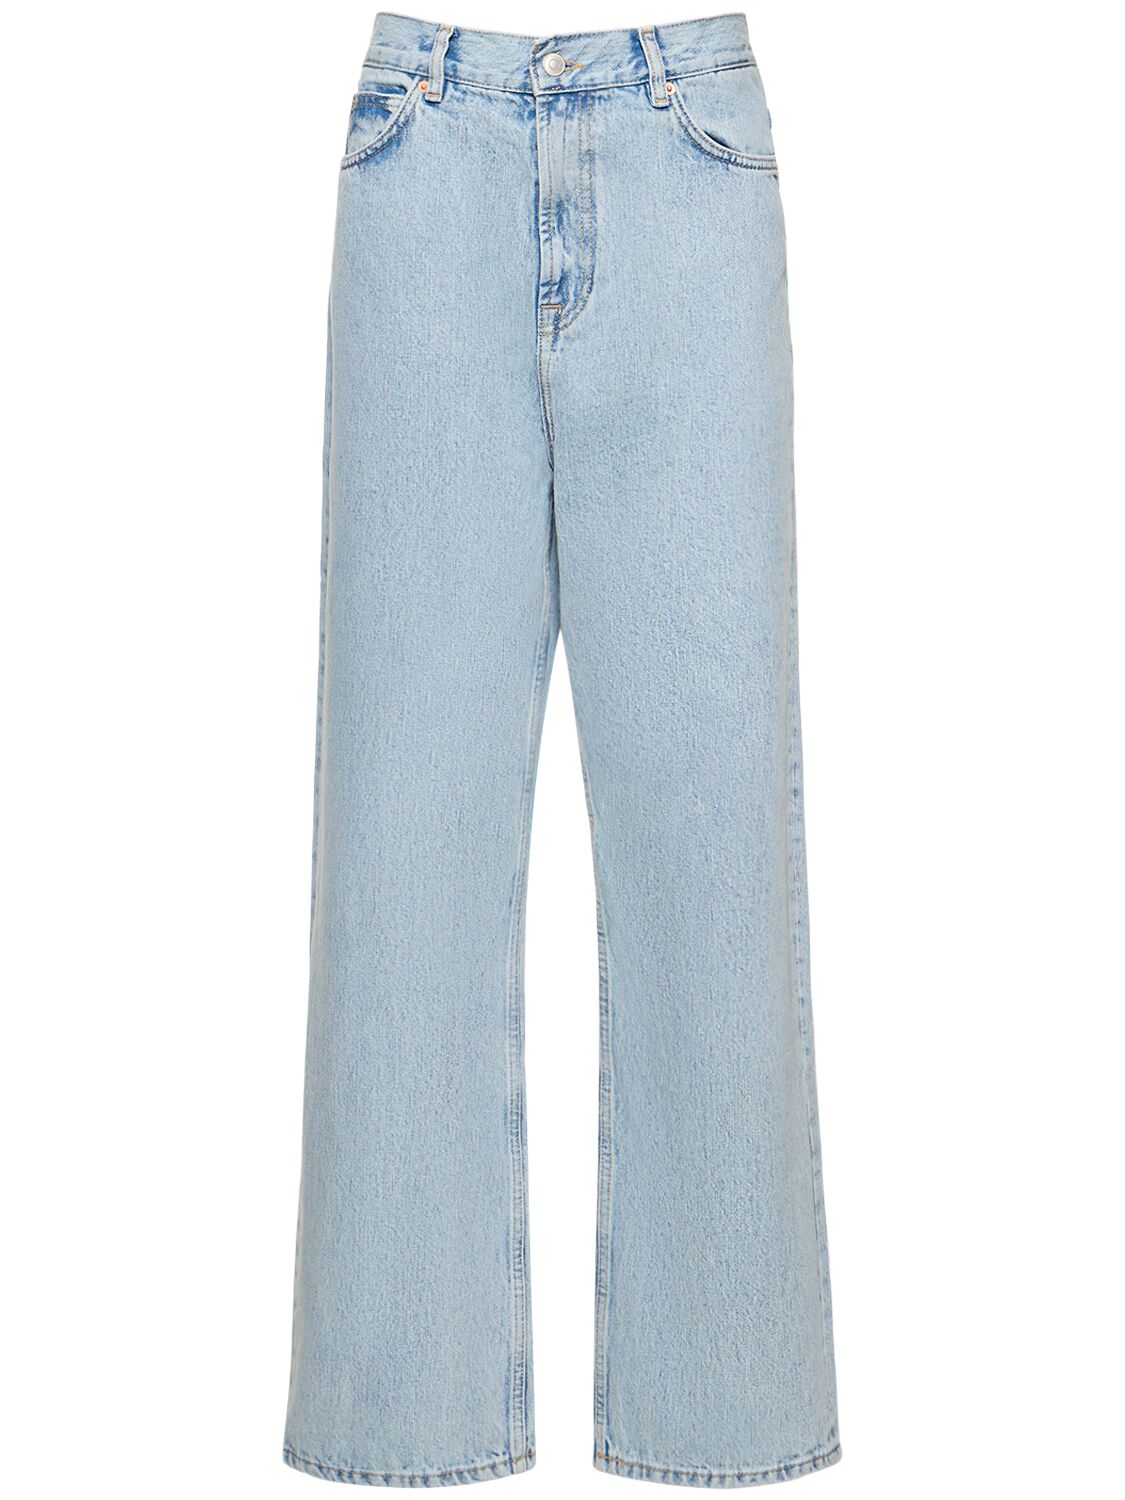 Image of Cotton Denim Low Rise Jeans